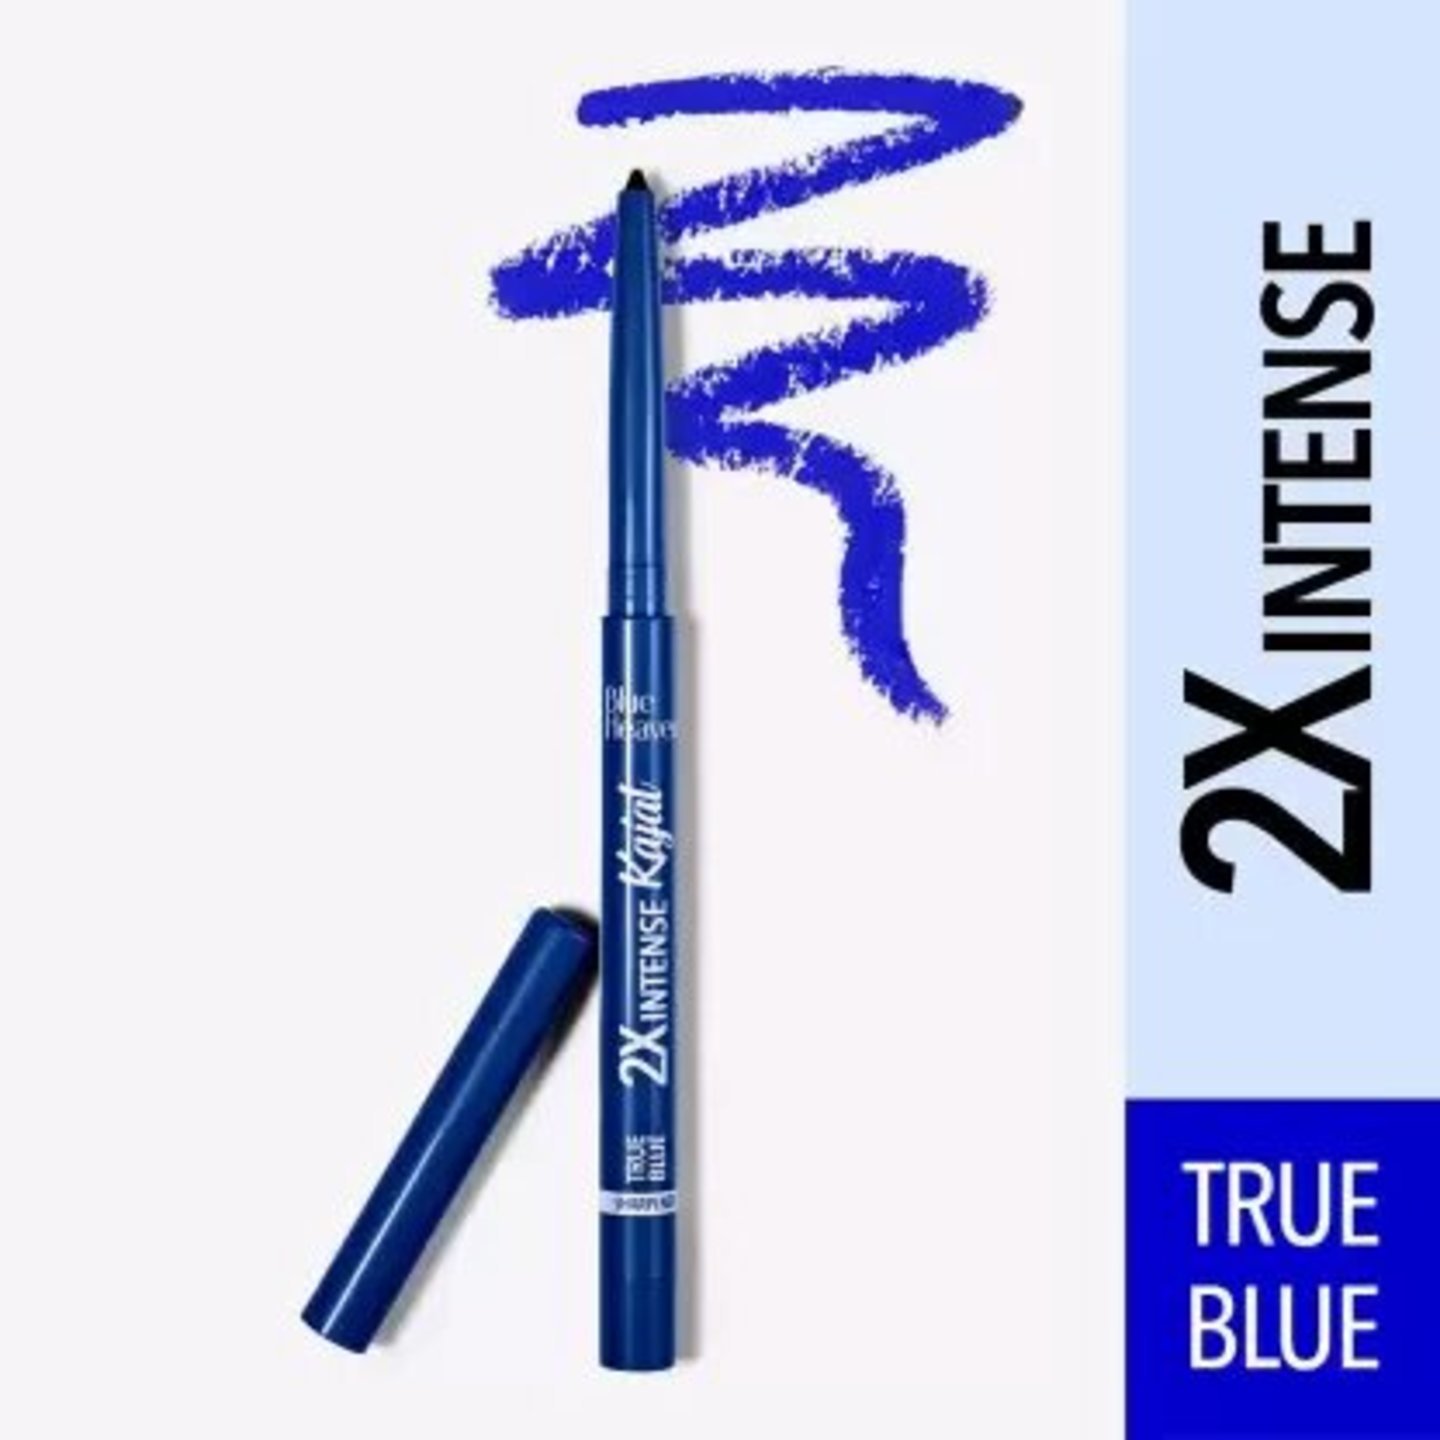 BLUE HEAVEN 2X INTENSE KAJAL STICK-TRUE BLUE-0.35 g